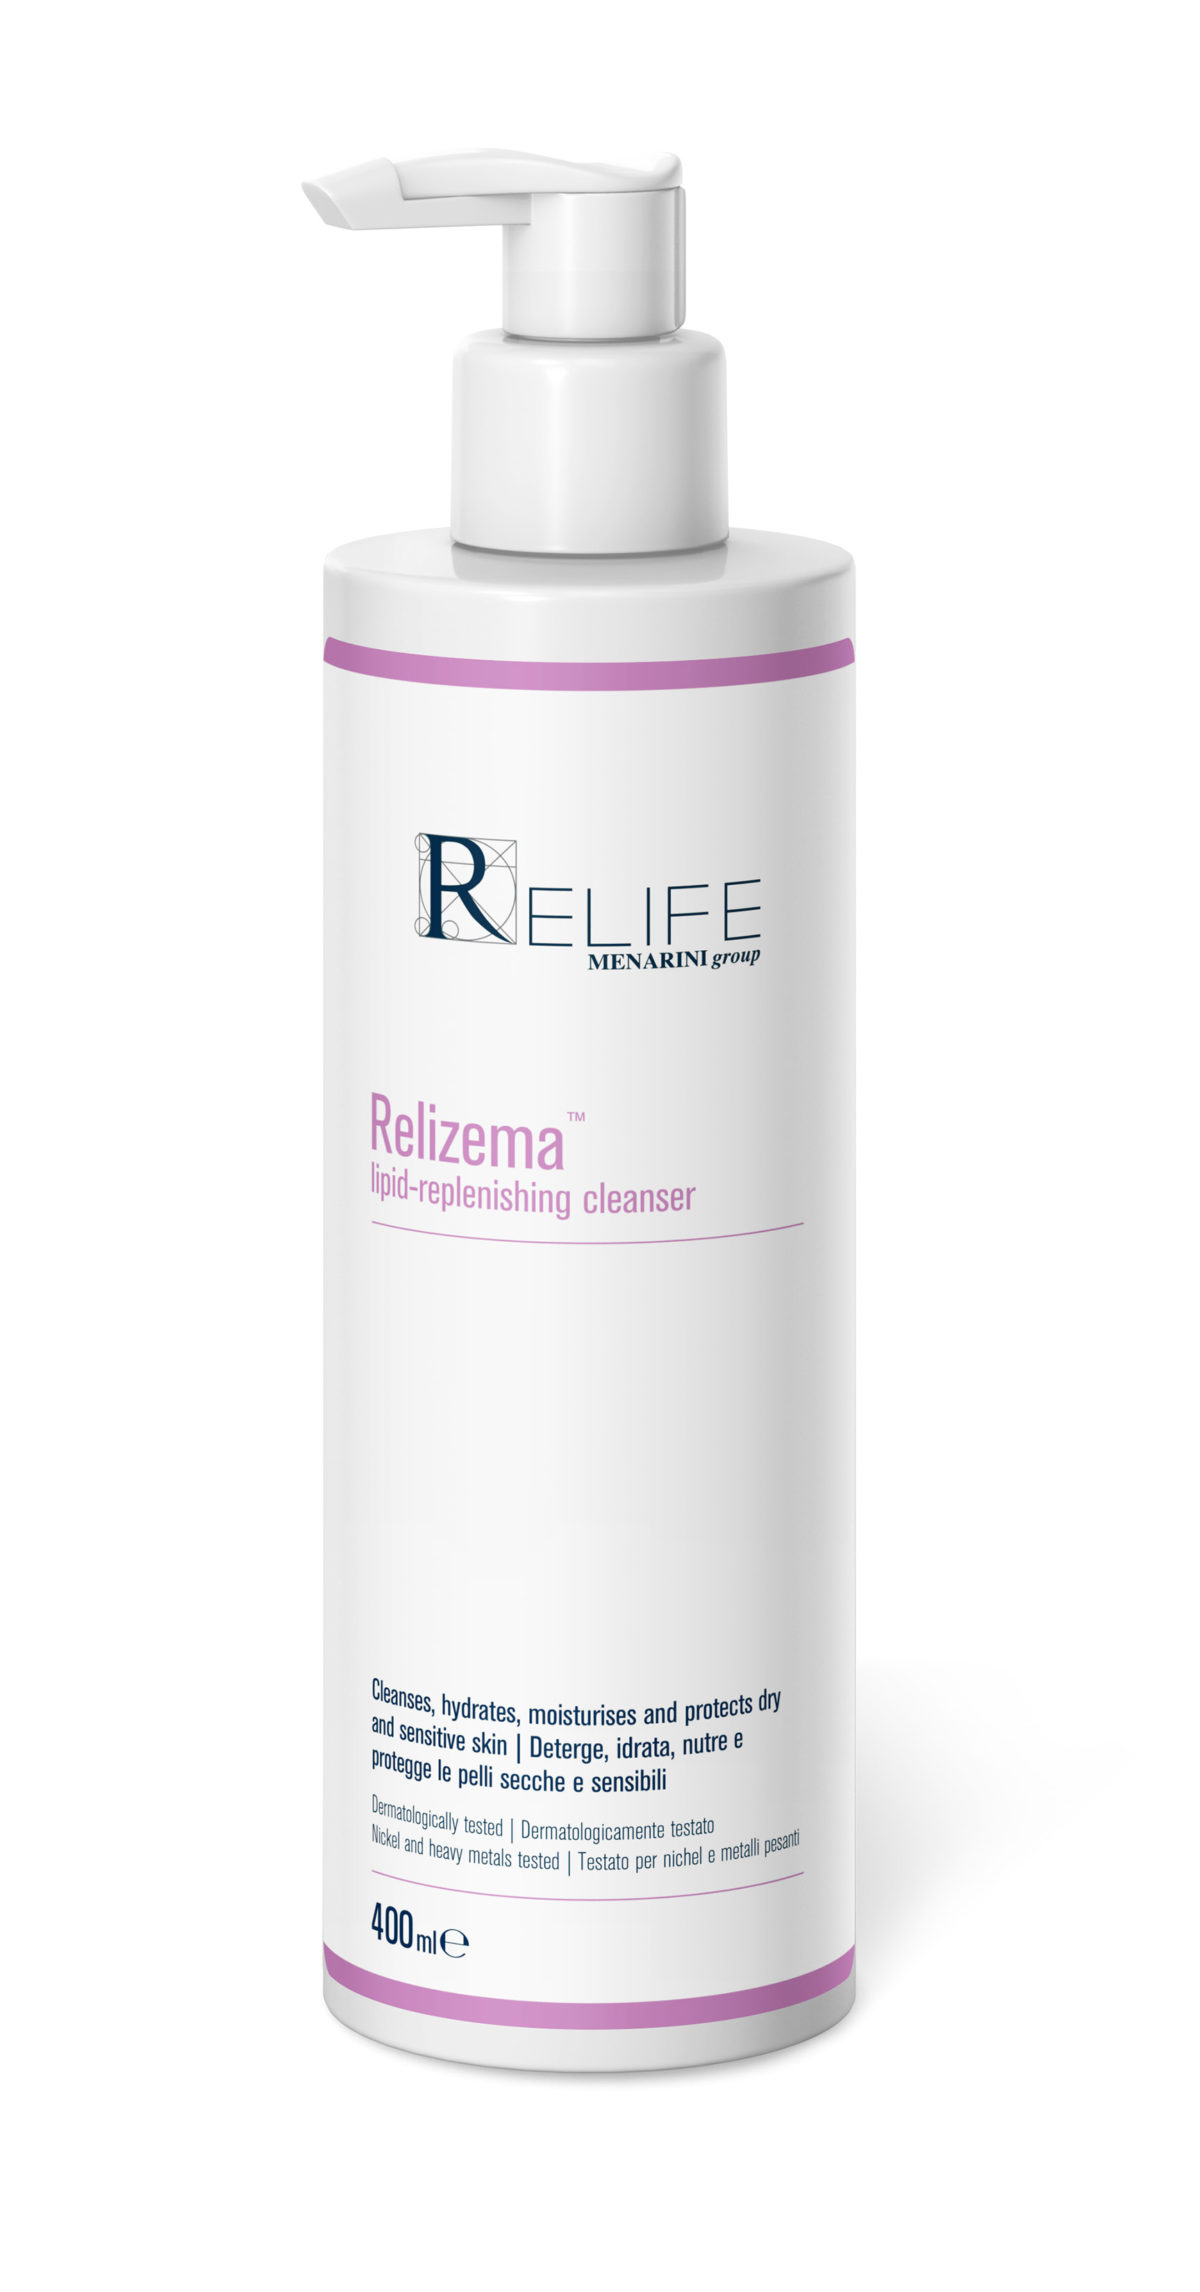 Relizema lipid-replenishing cleanser